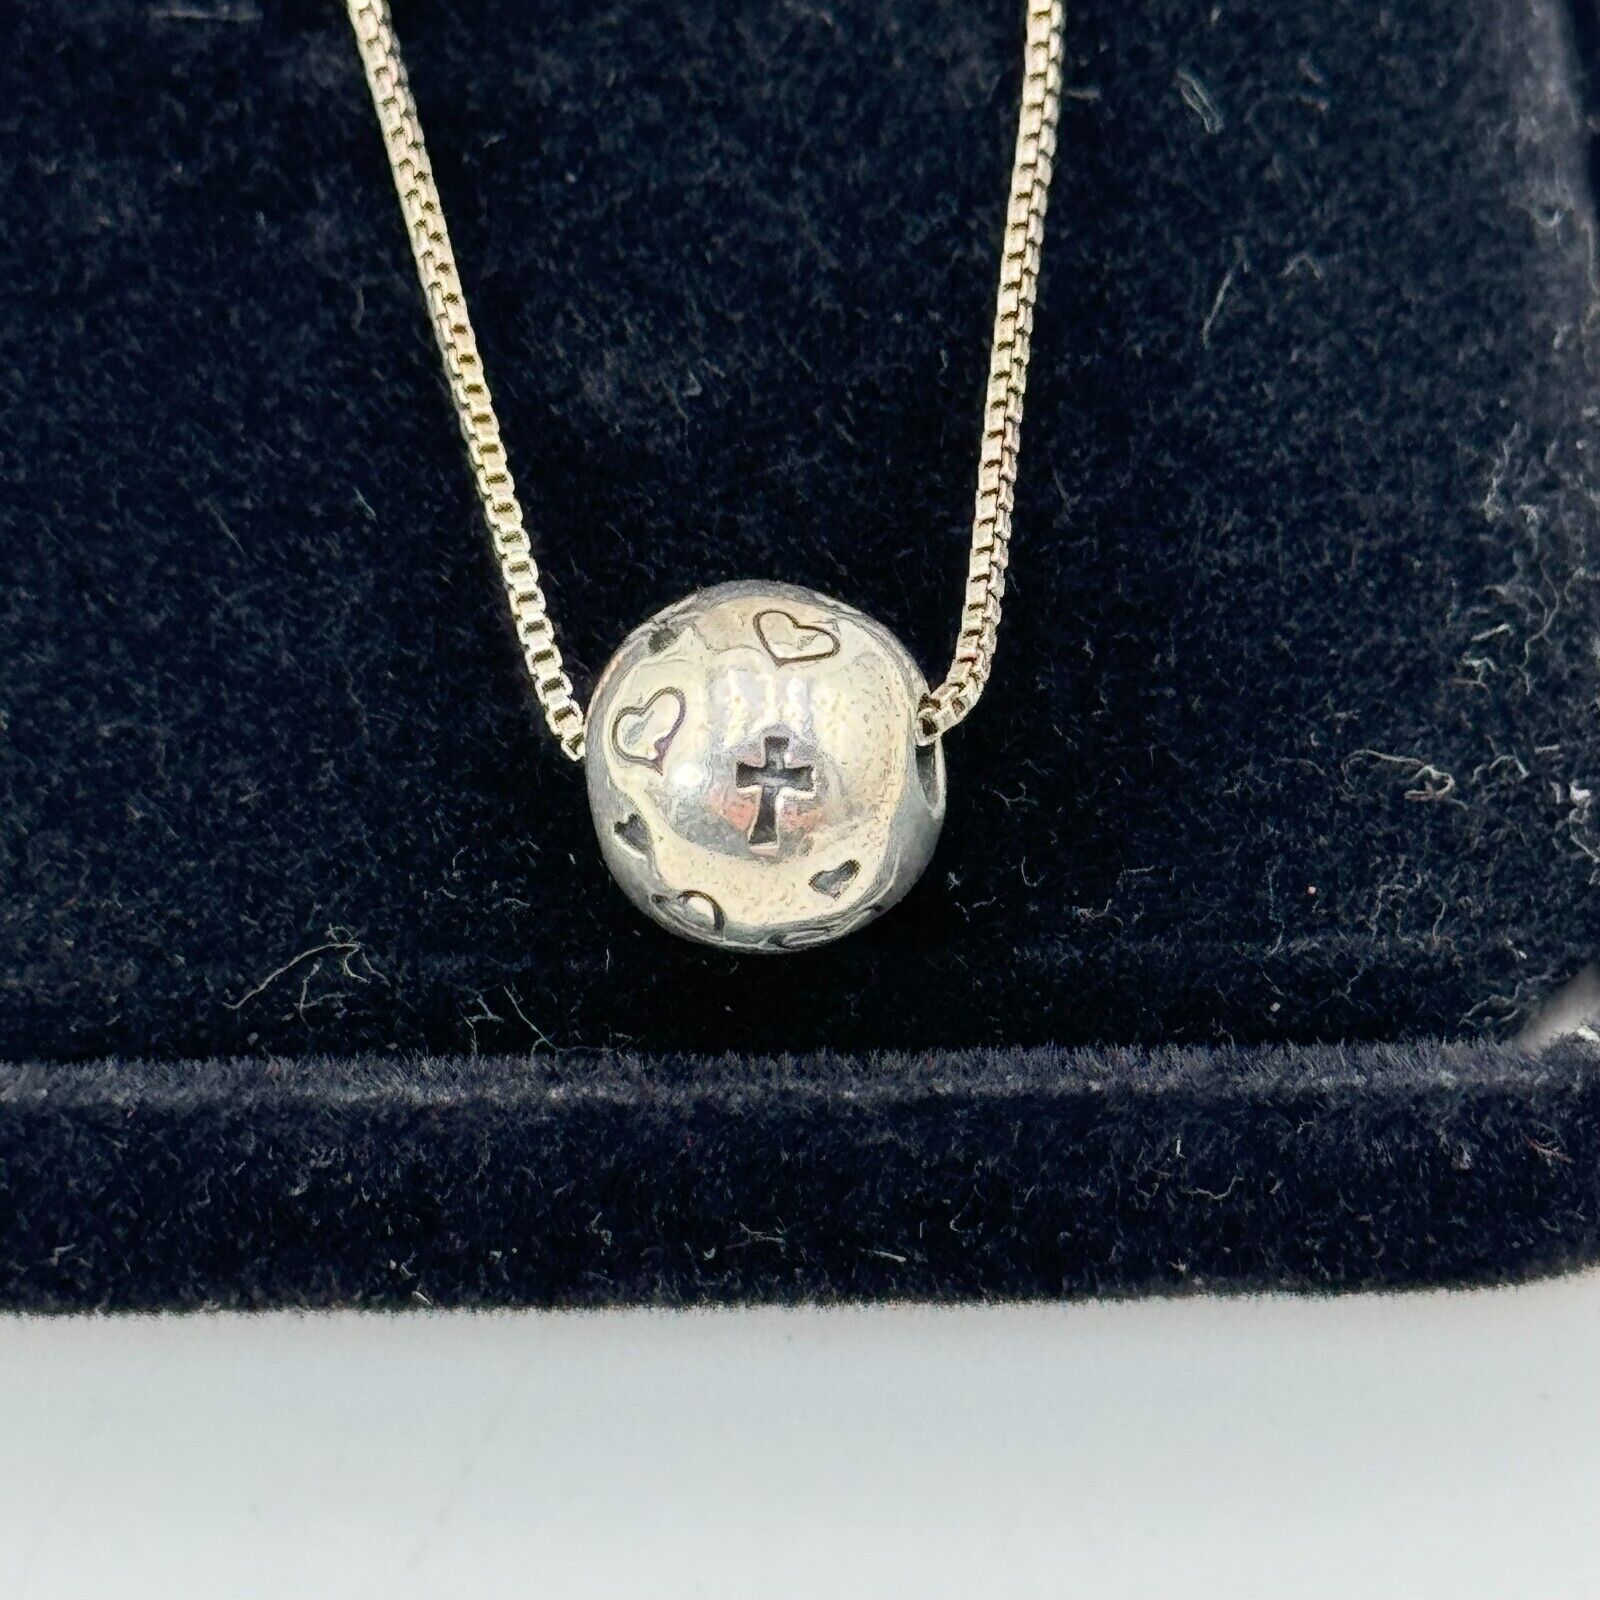 Bob Siemon Designs Sterling Silver 16in Chain Necklace Sphere Cross Heart